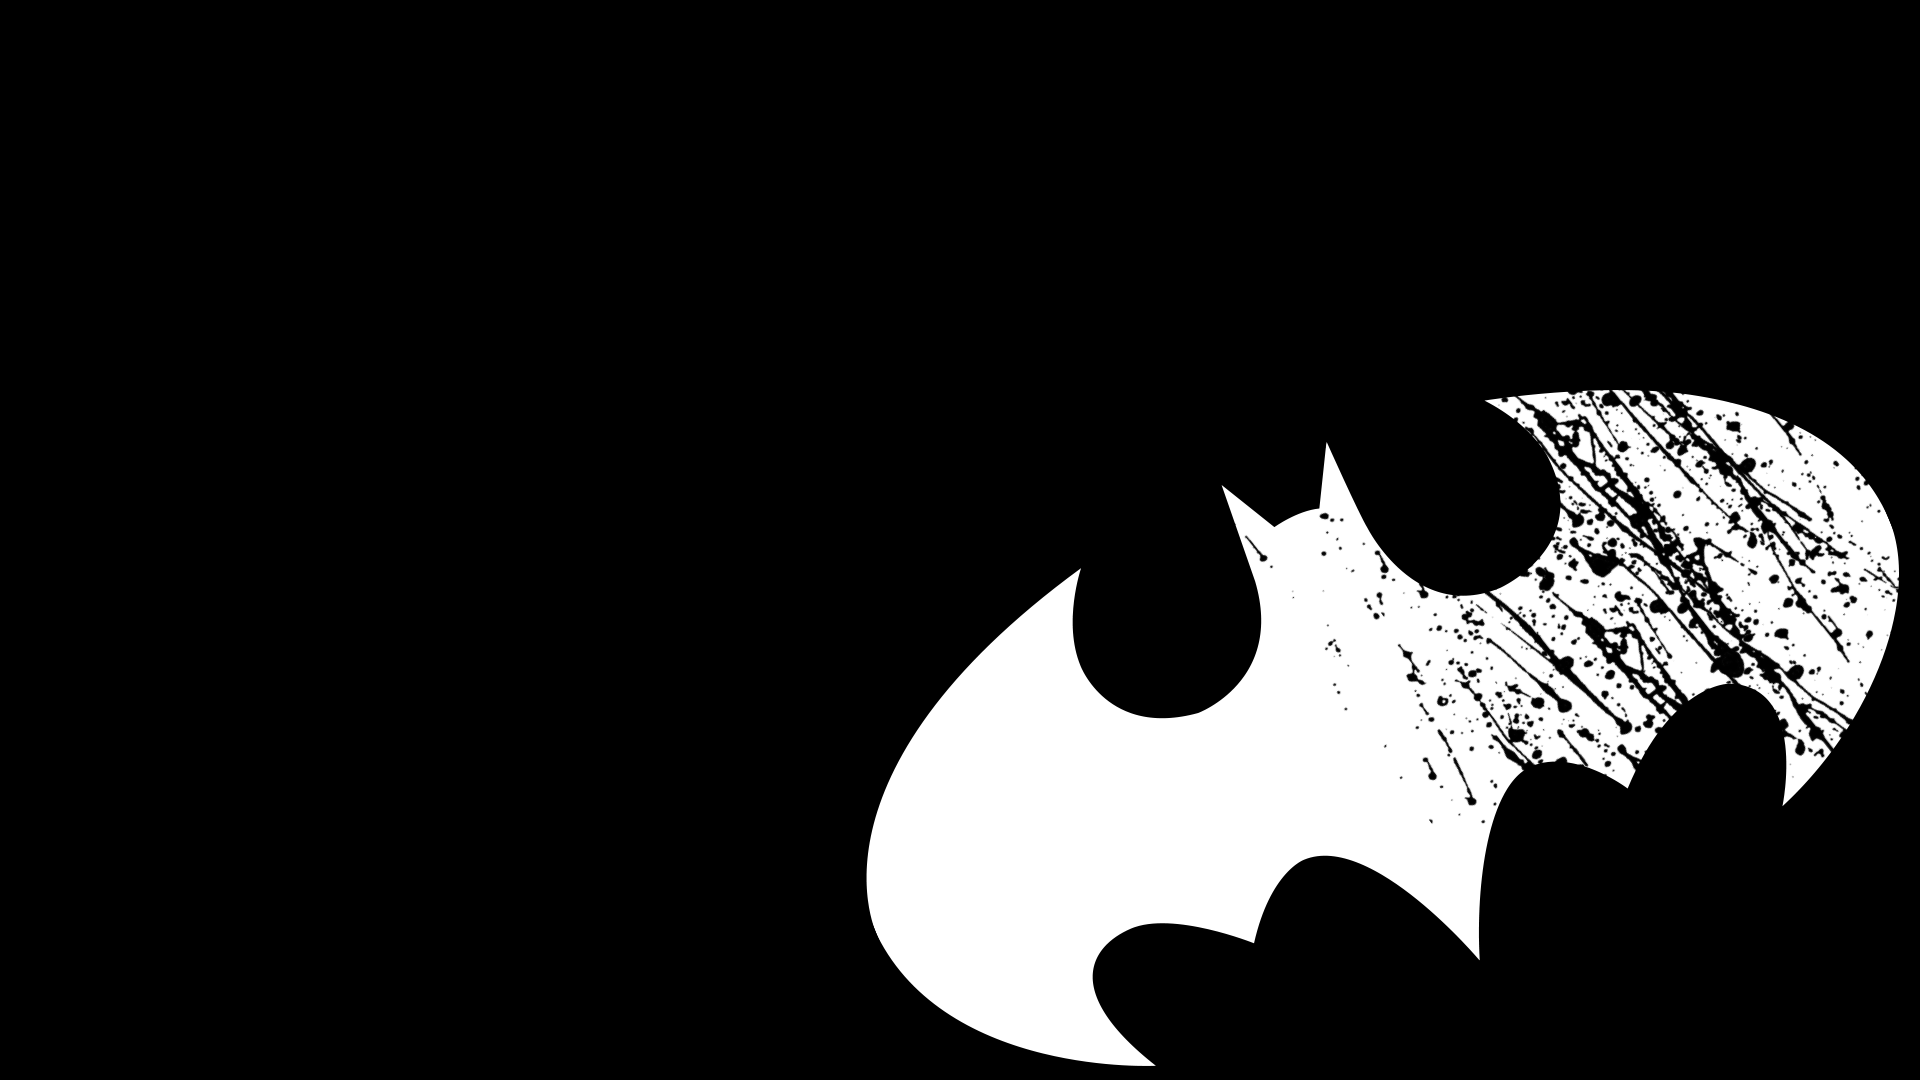 Batman Computer Wallpaper, Desktop Background 1920x1080 Id: 395105